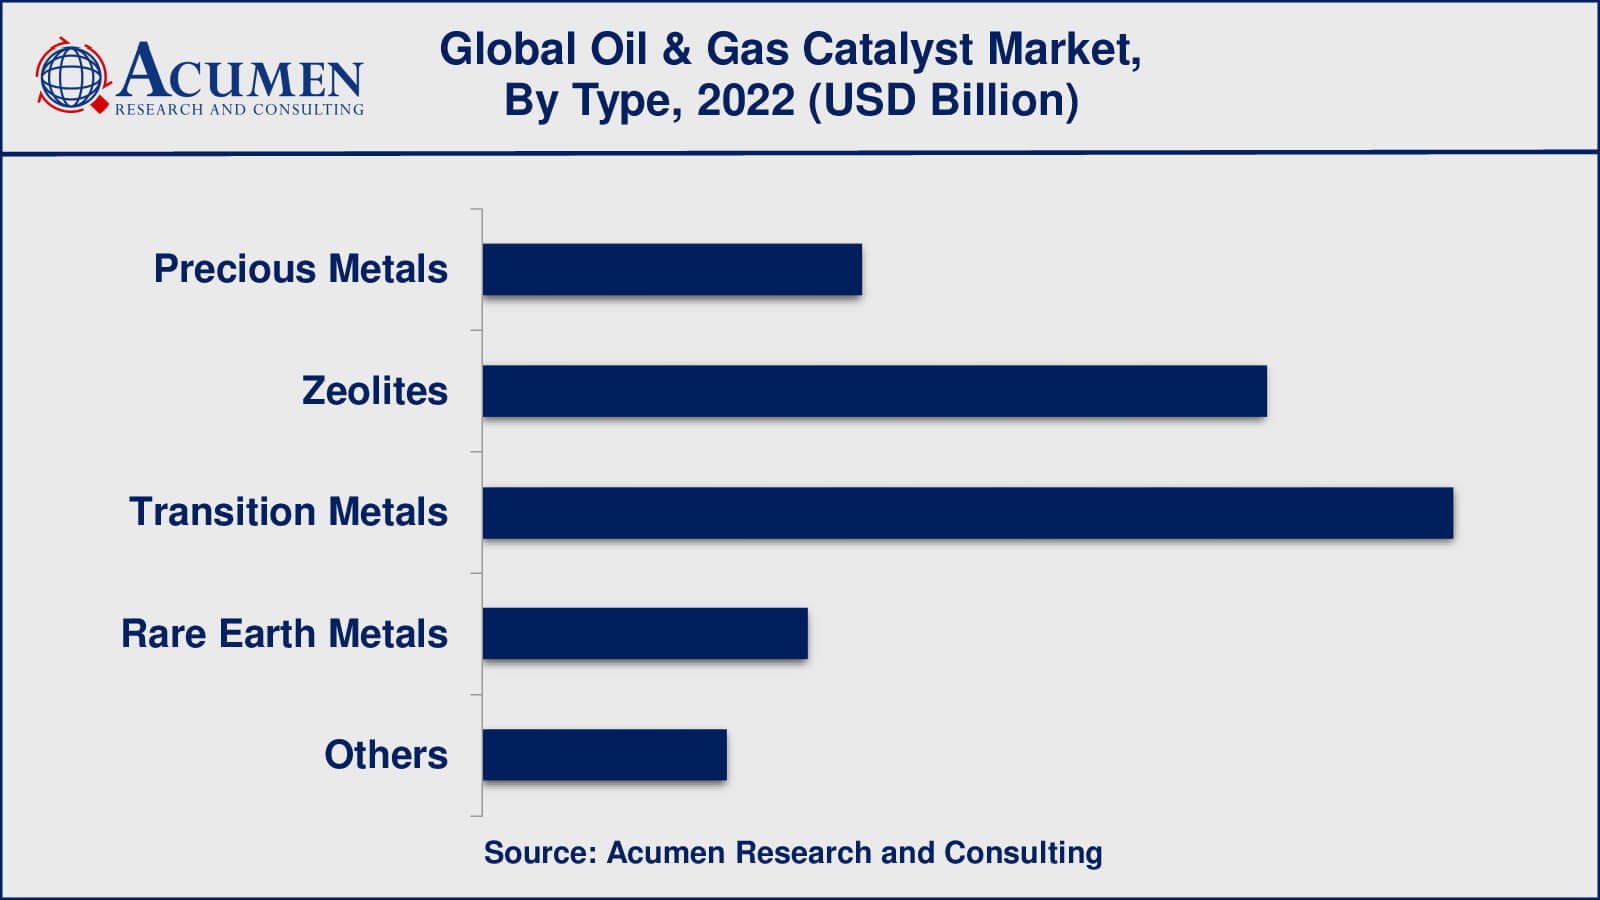 Oil & Gas Catalyst Market Analysis Period